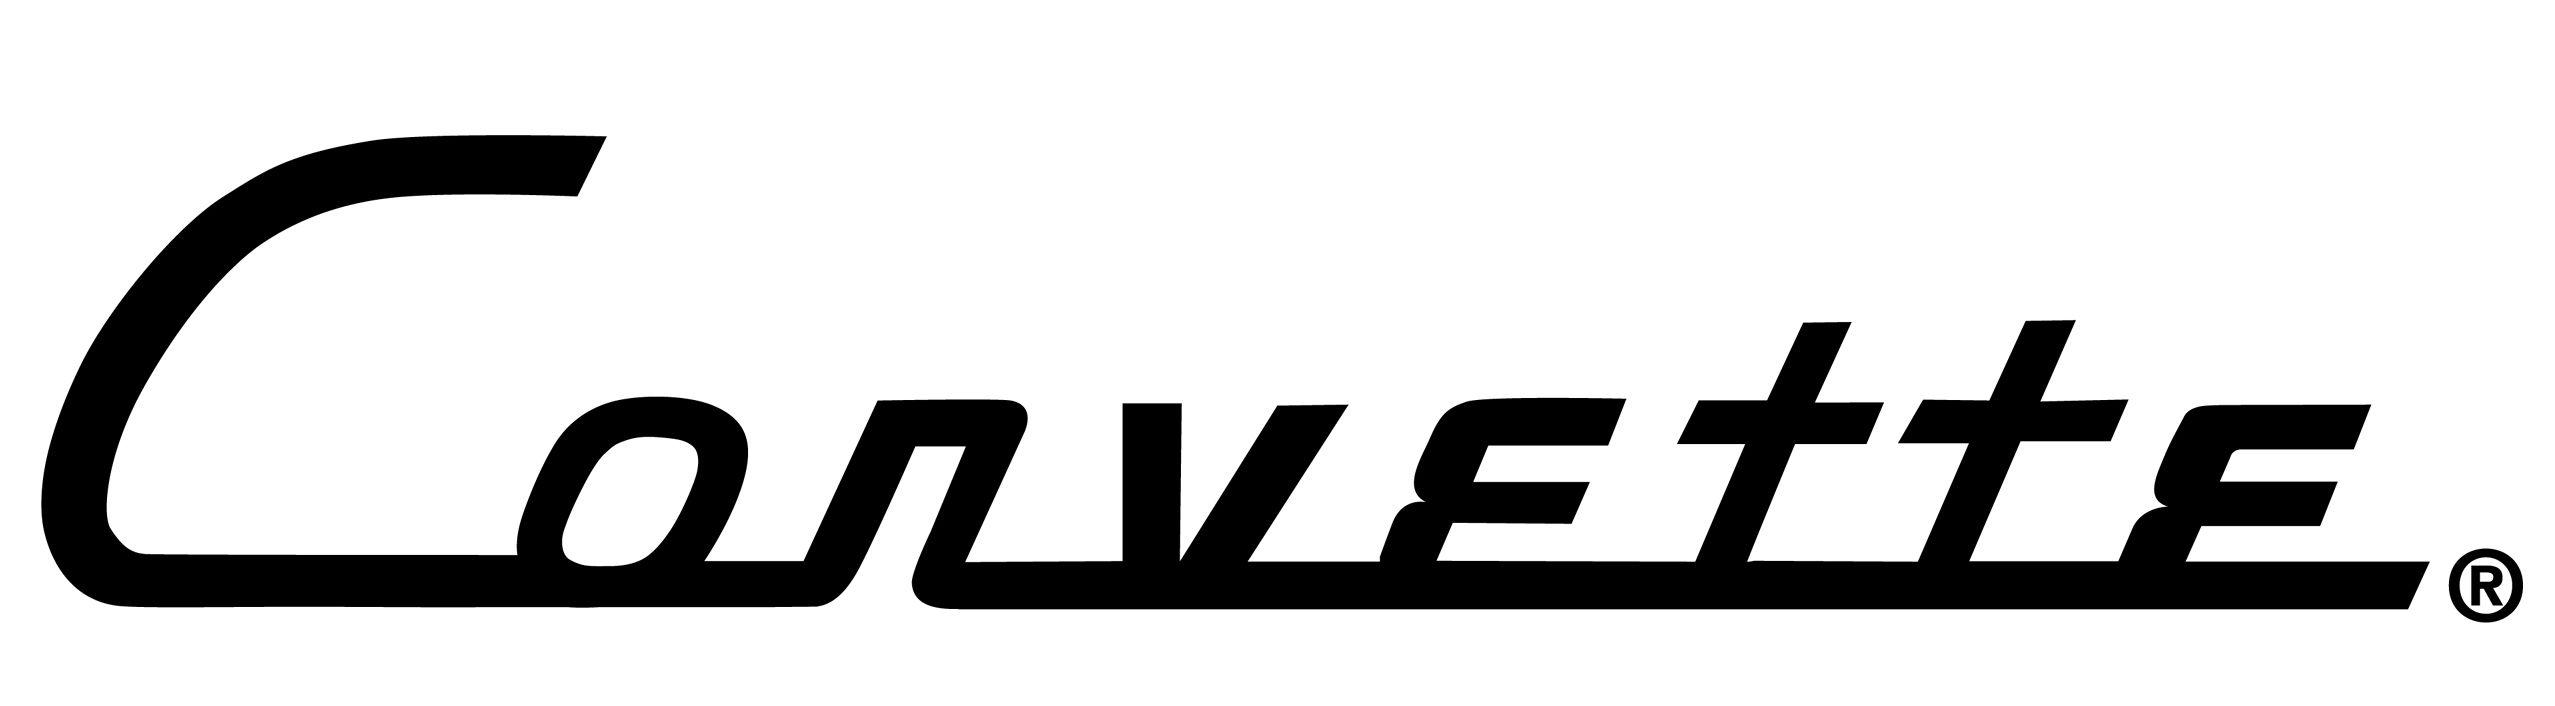 Corvette Old Logo - Todd Heathcote (toddheathcote)